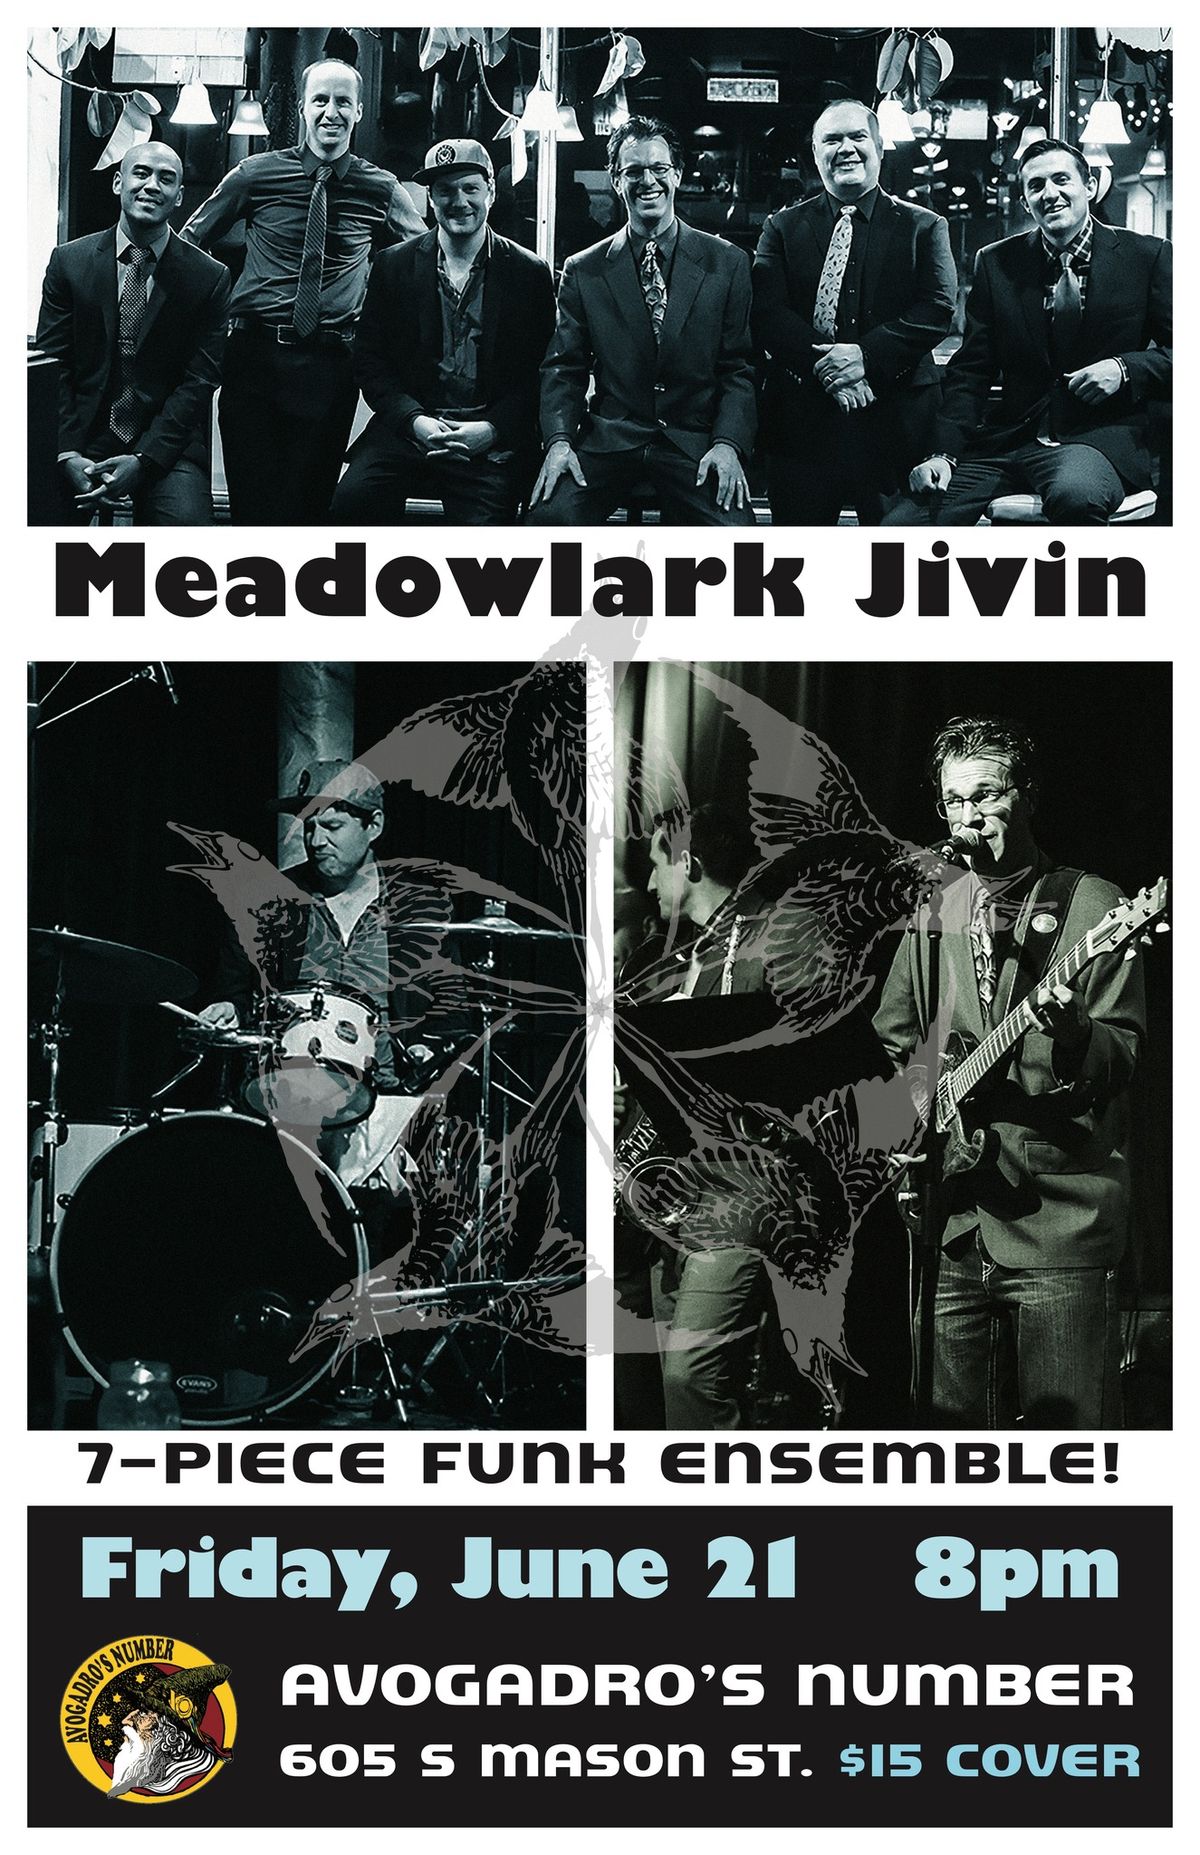 Meadowlark Jivin live at Avogadro's Number! 